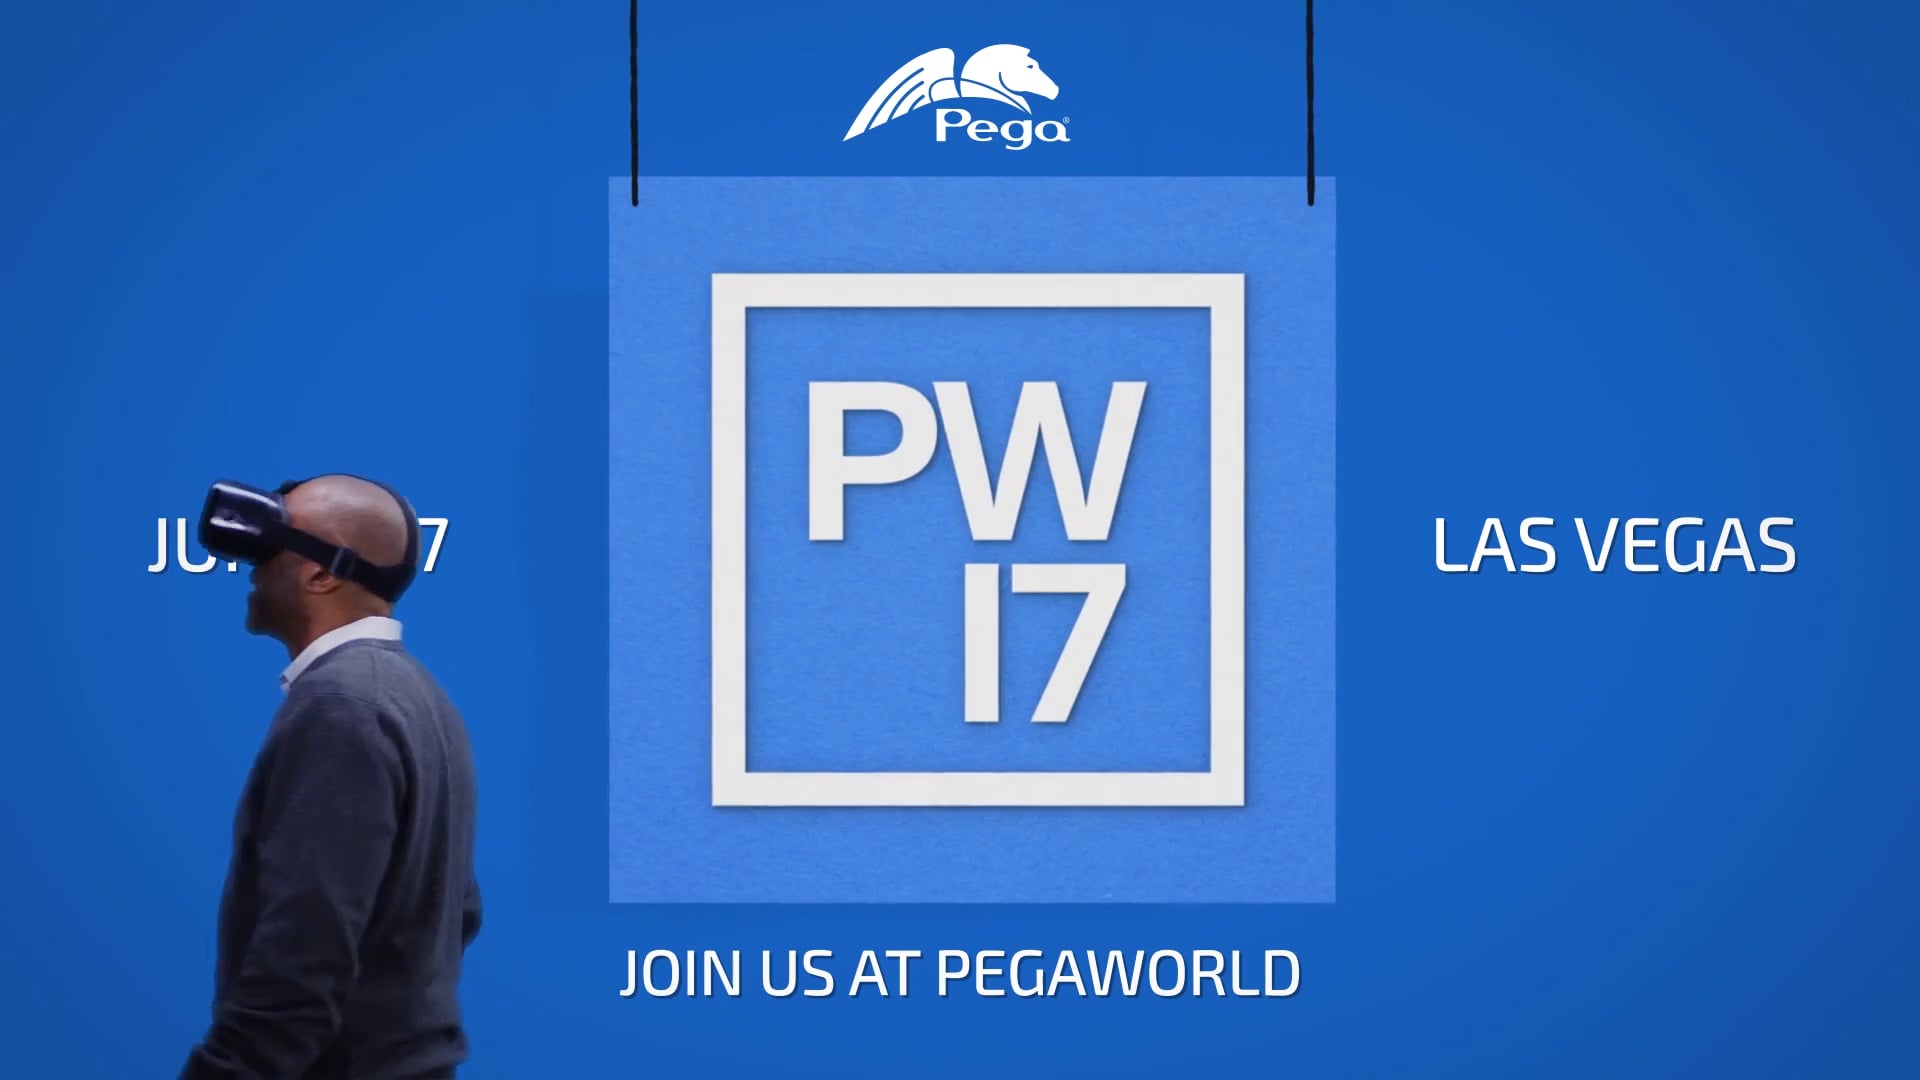 Pegaworld promos on Vimeo